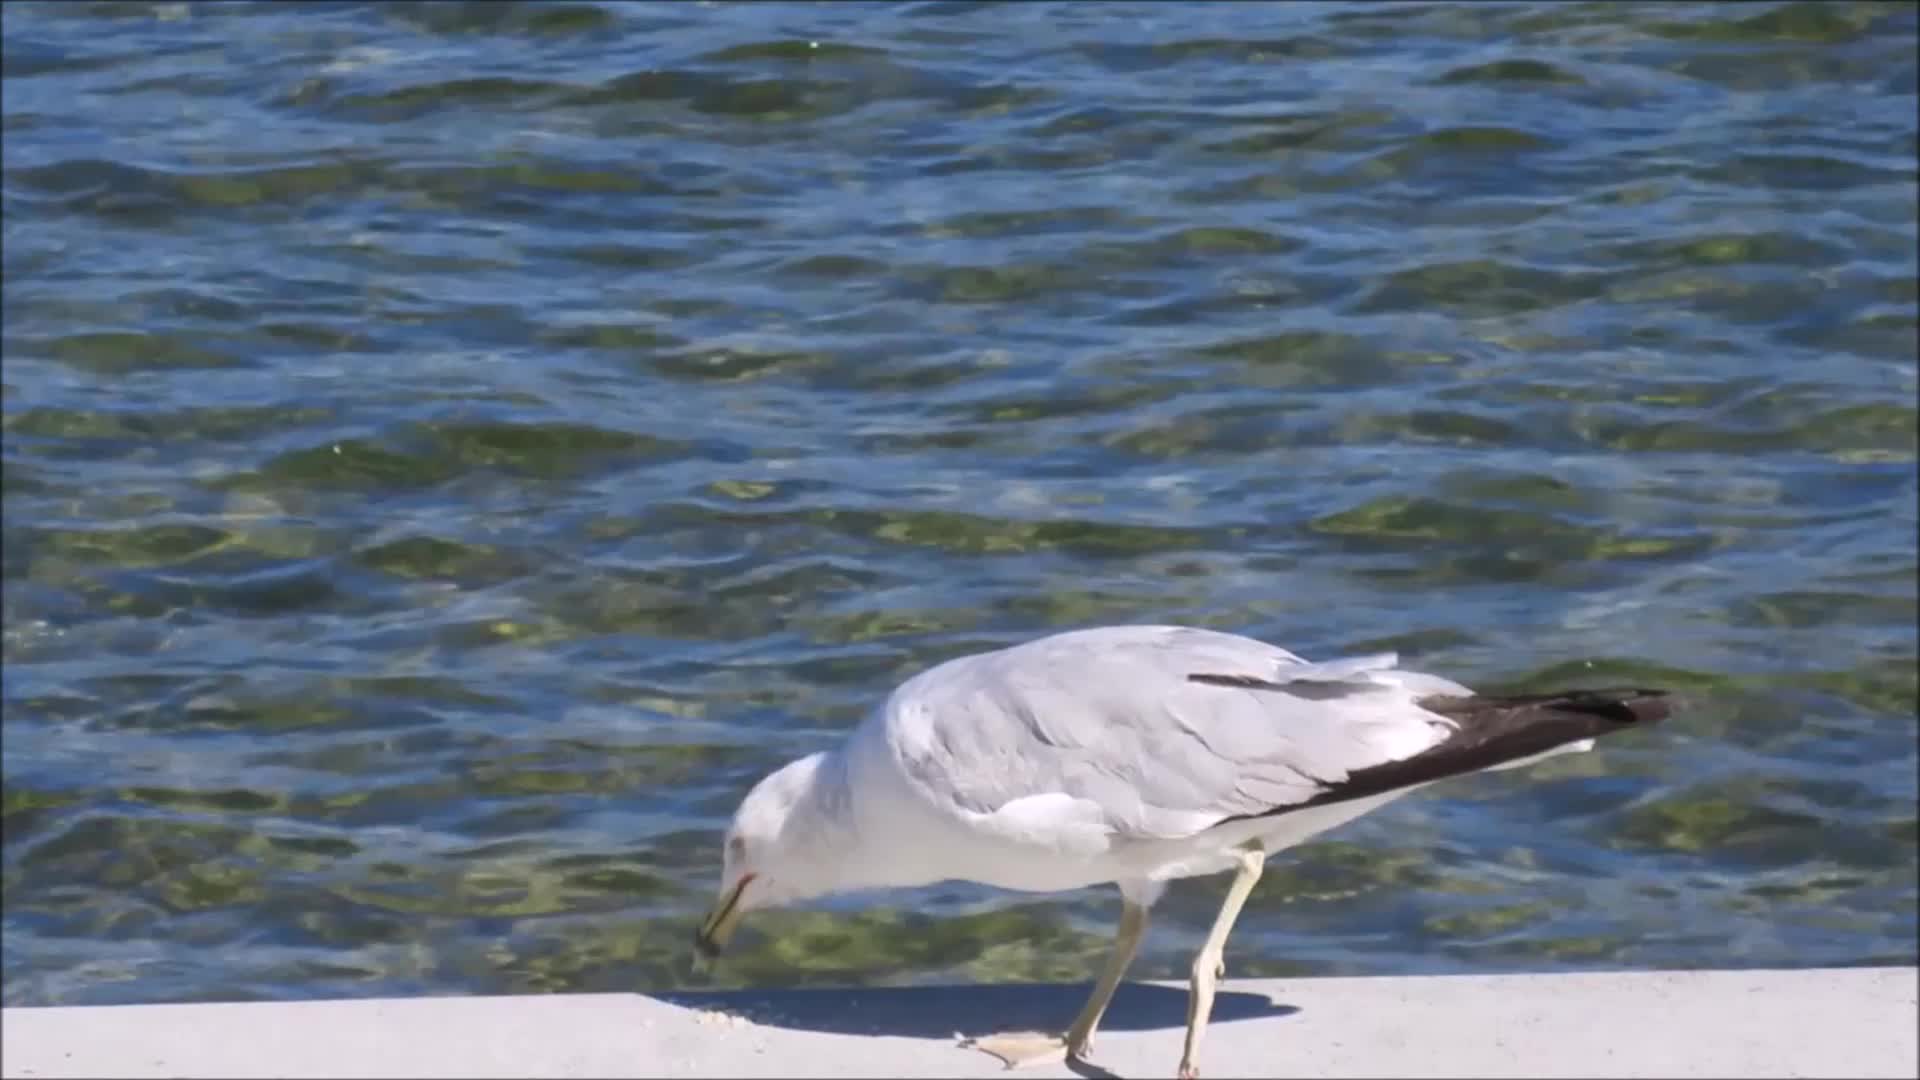 Gull Eating by Lake